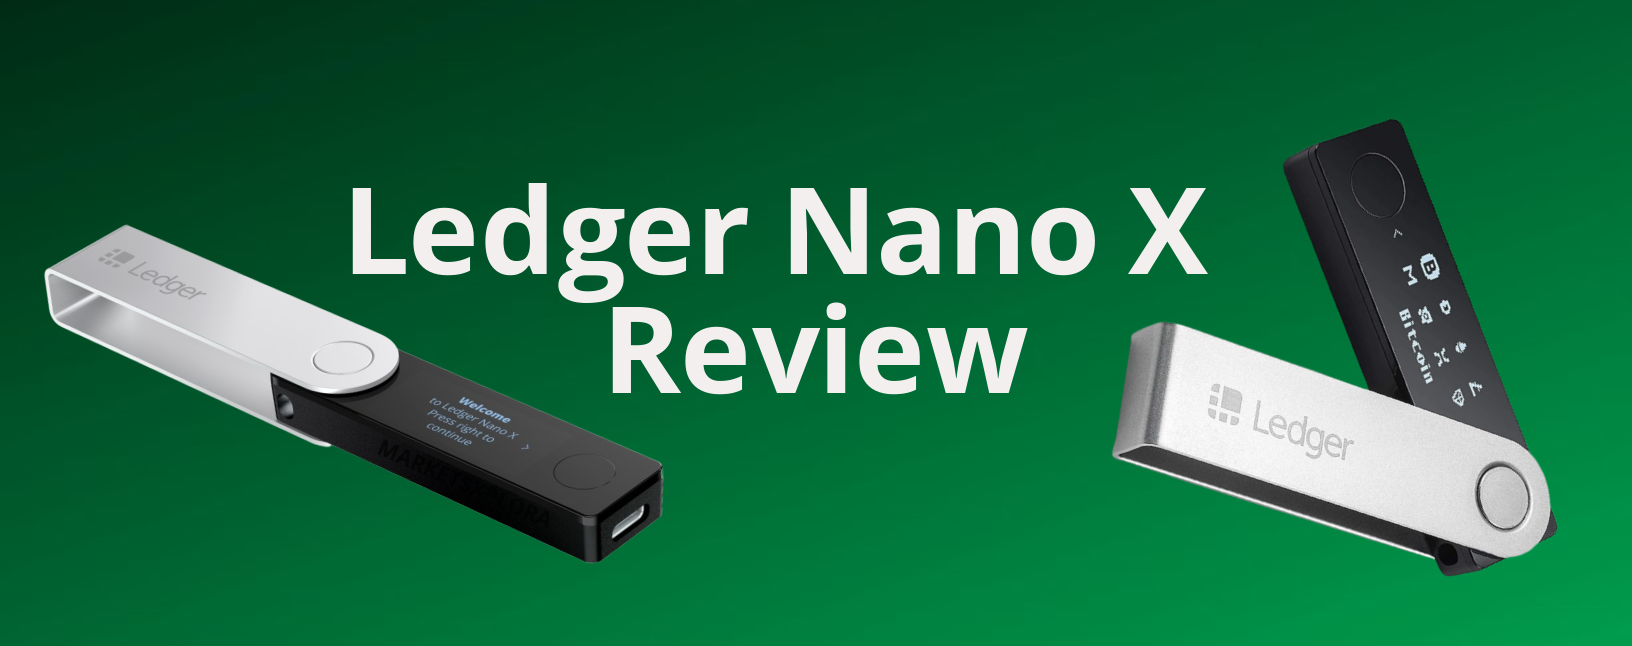 Ledger Nano X Review